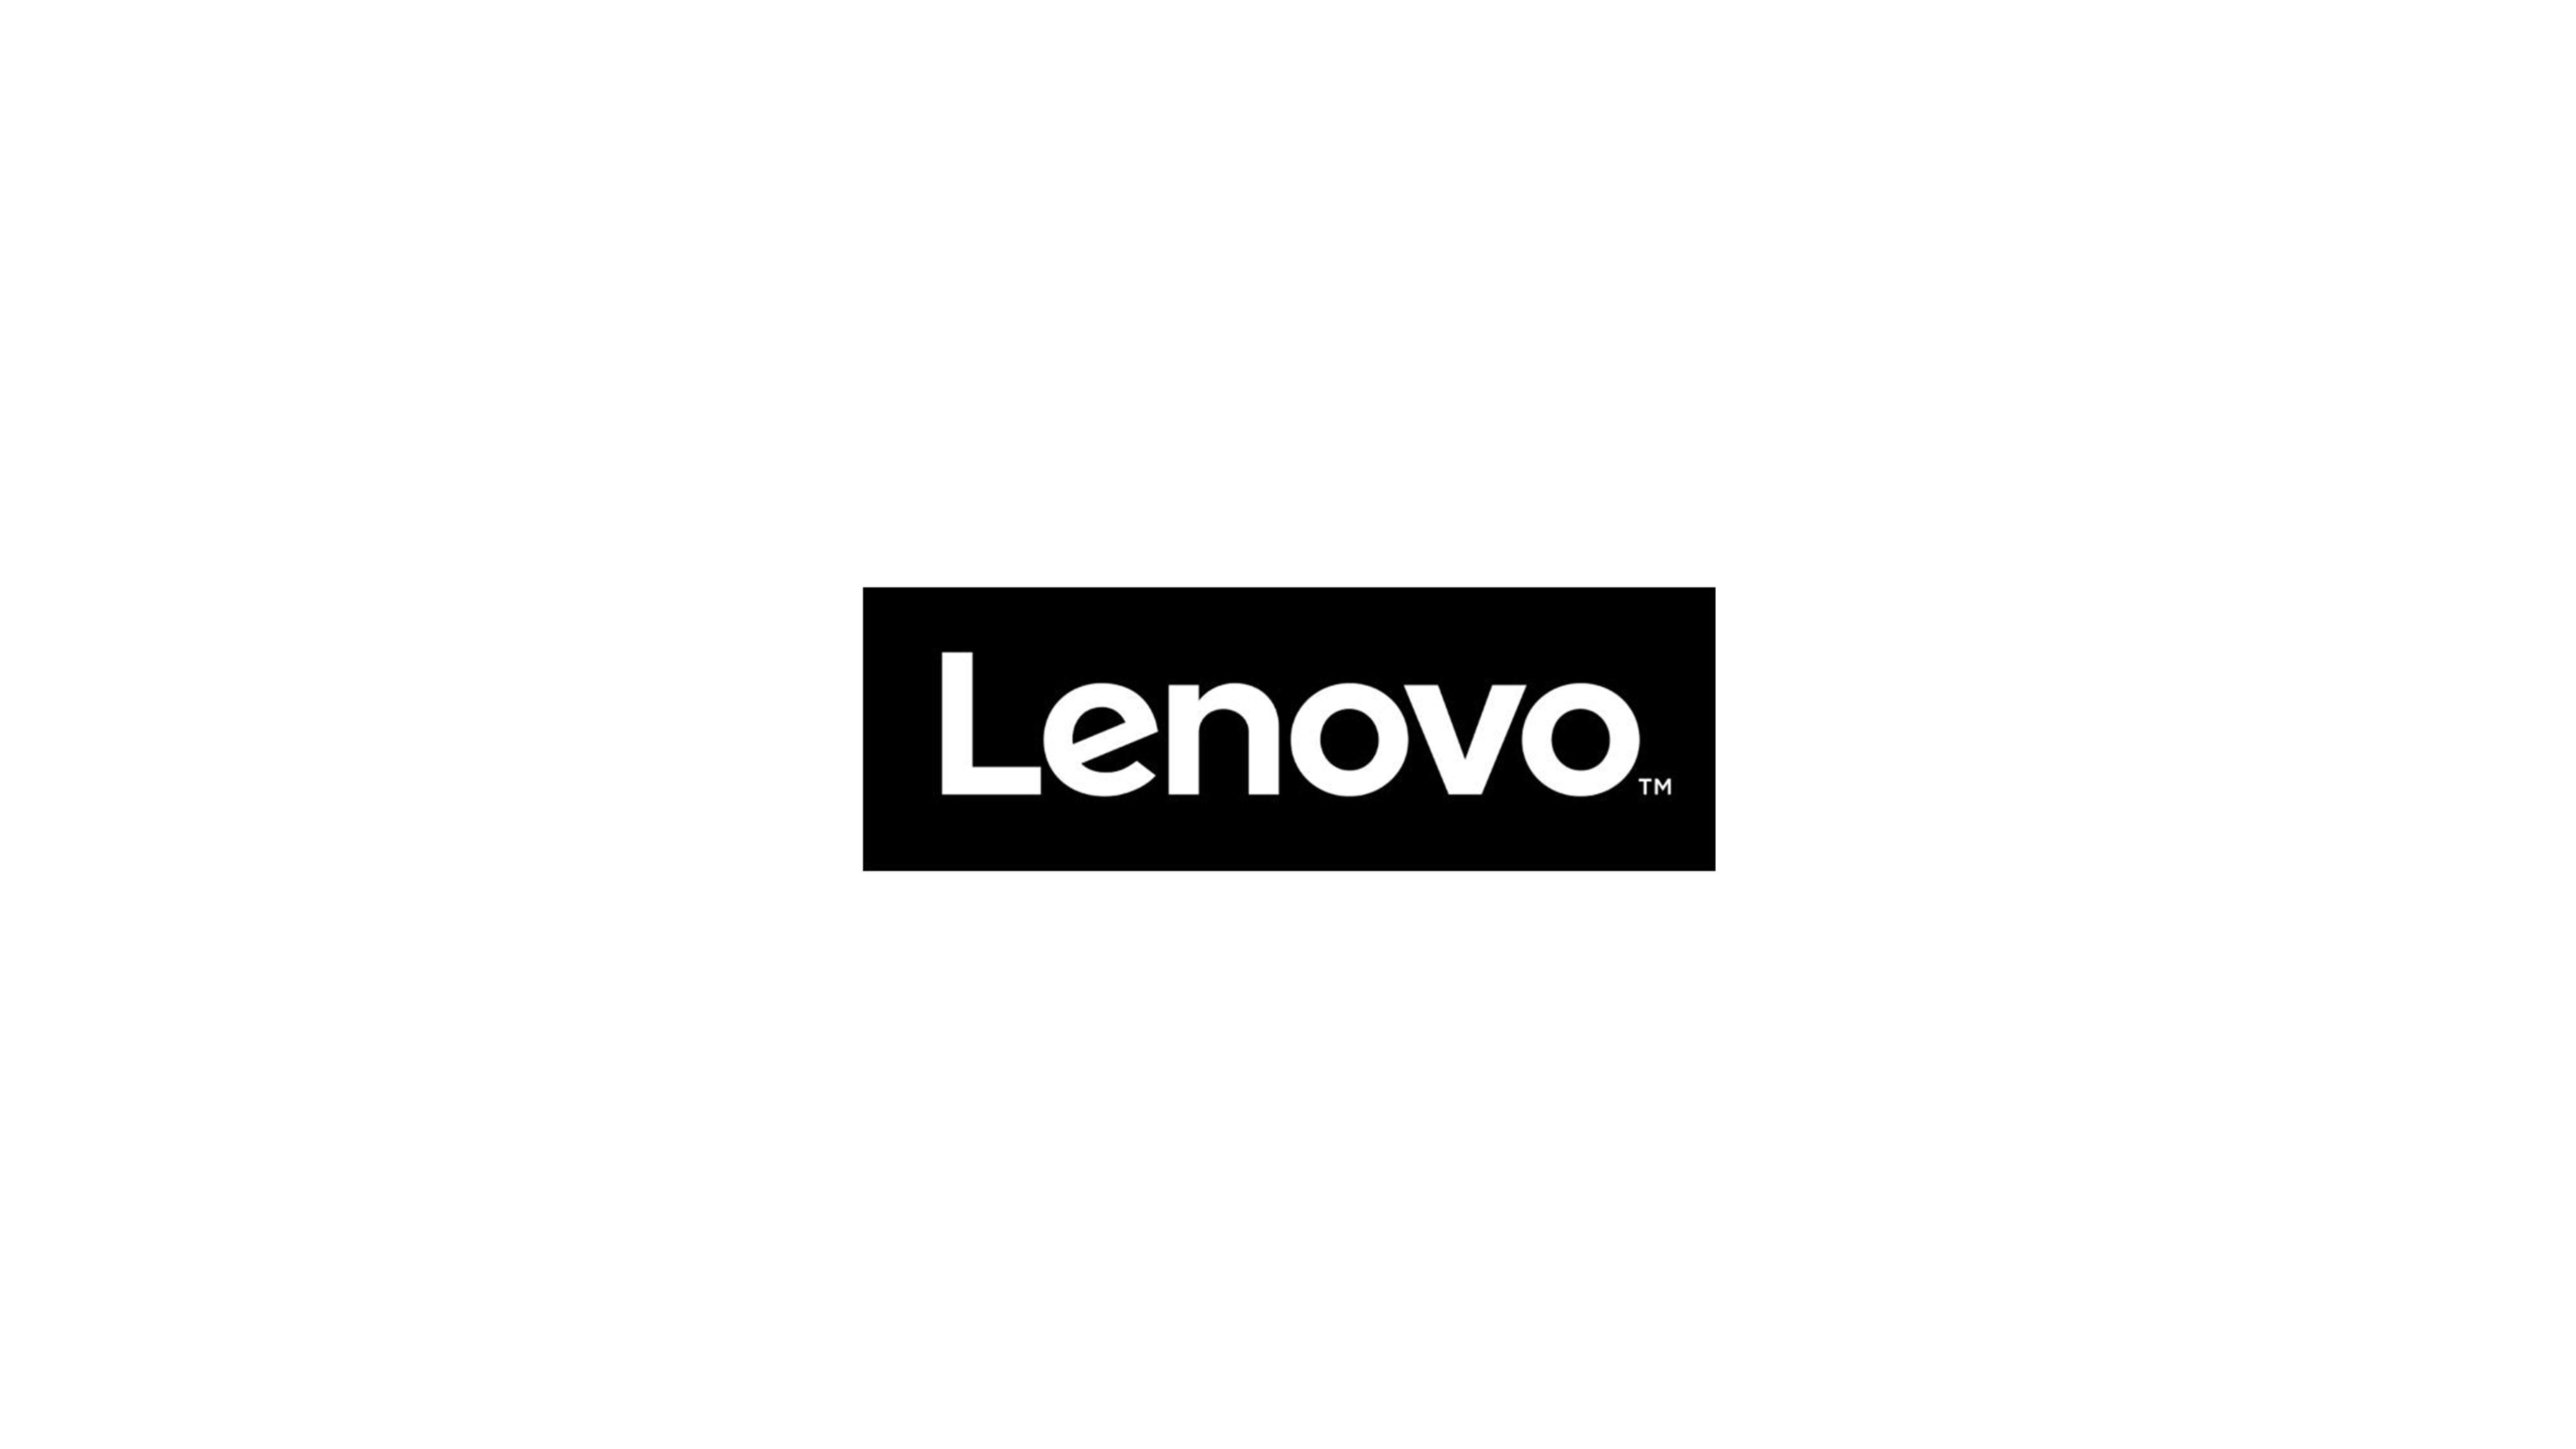 联想 Lenovo的历史LOGO